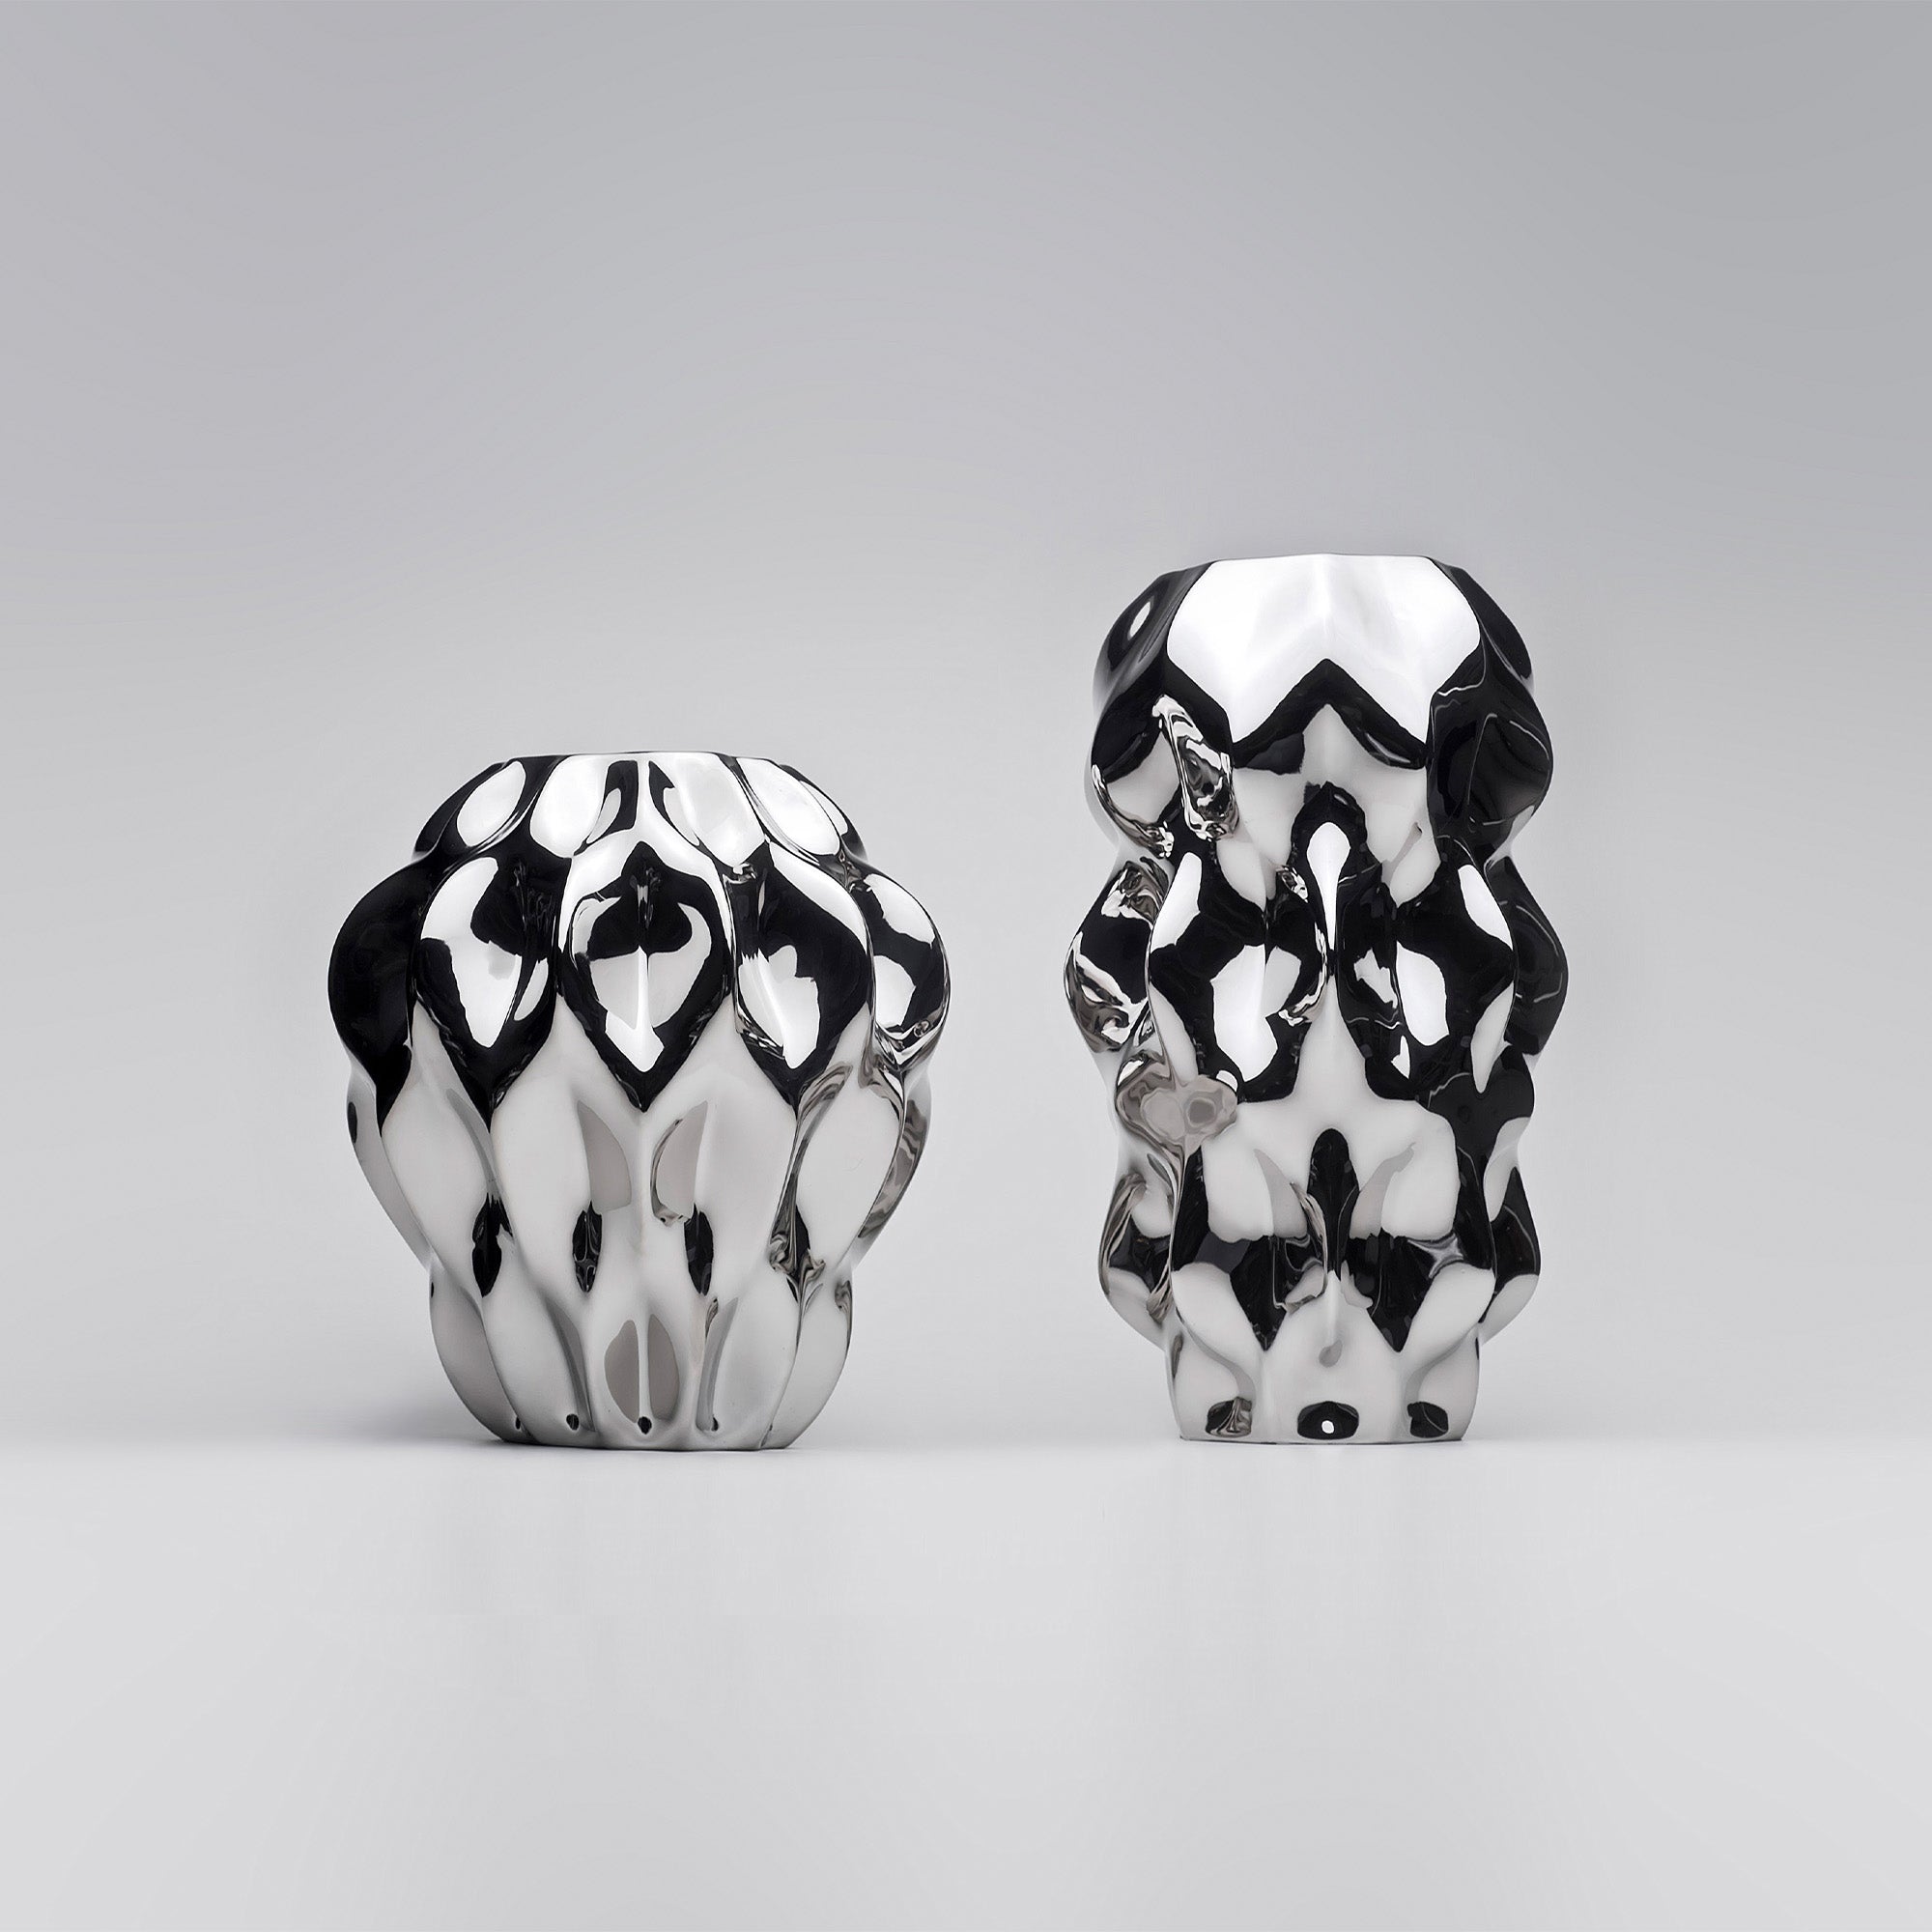 Plissan G Porcelain Vase (h40 cm) - Holaria